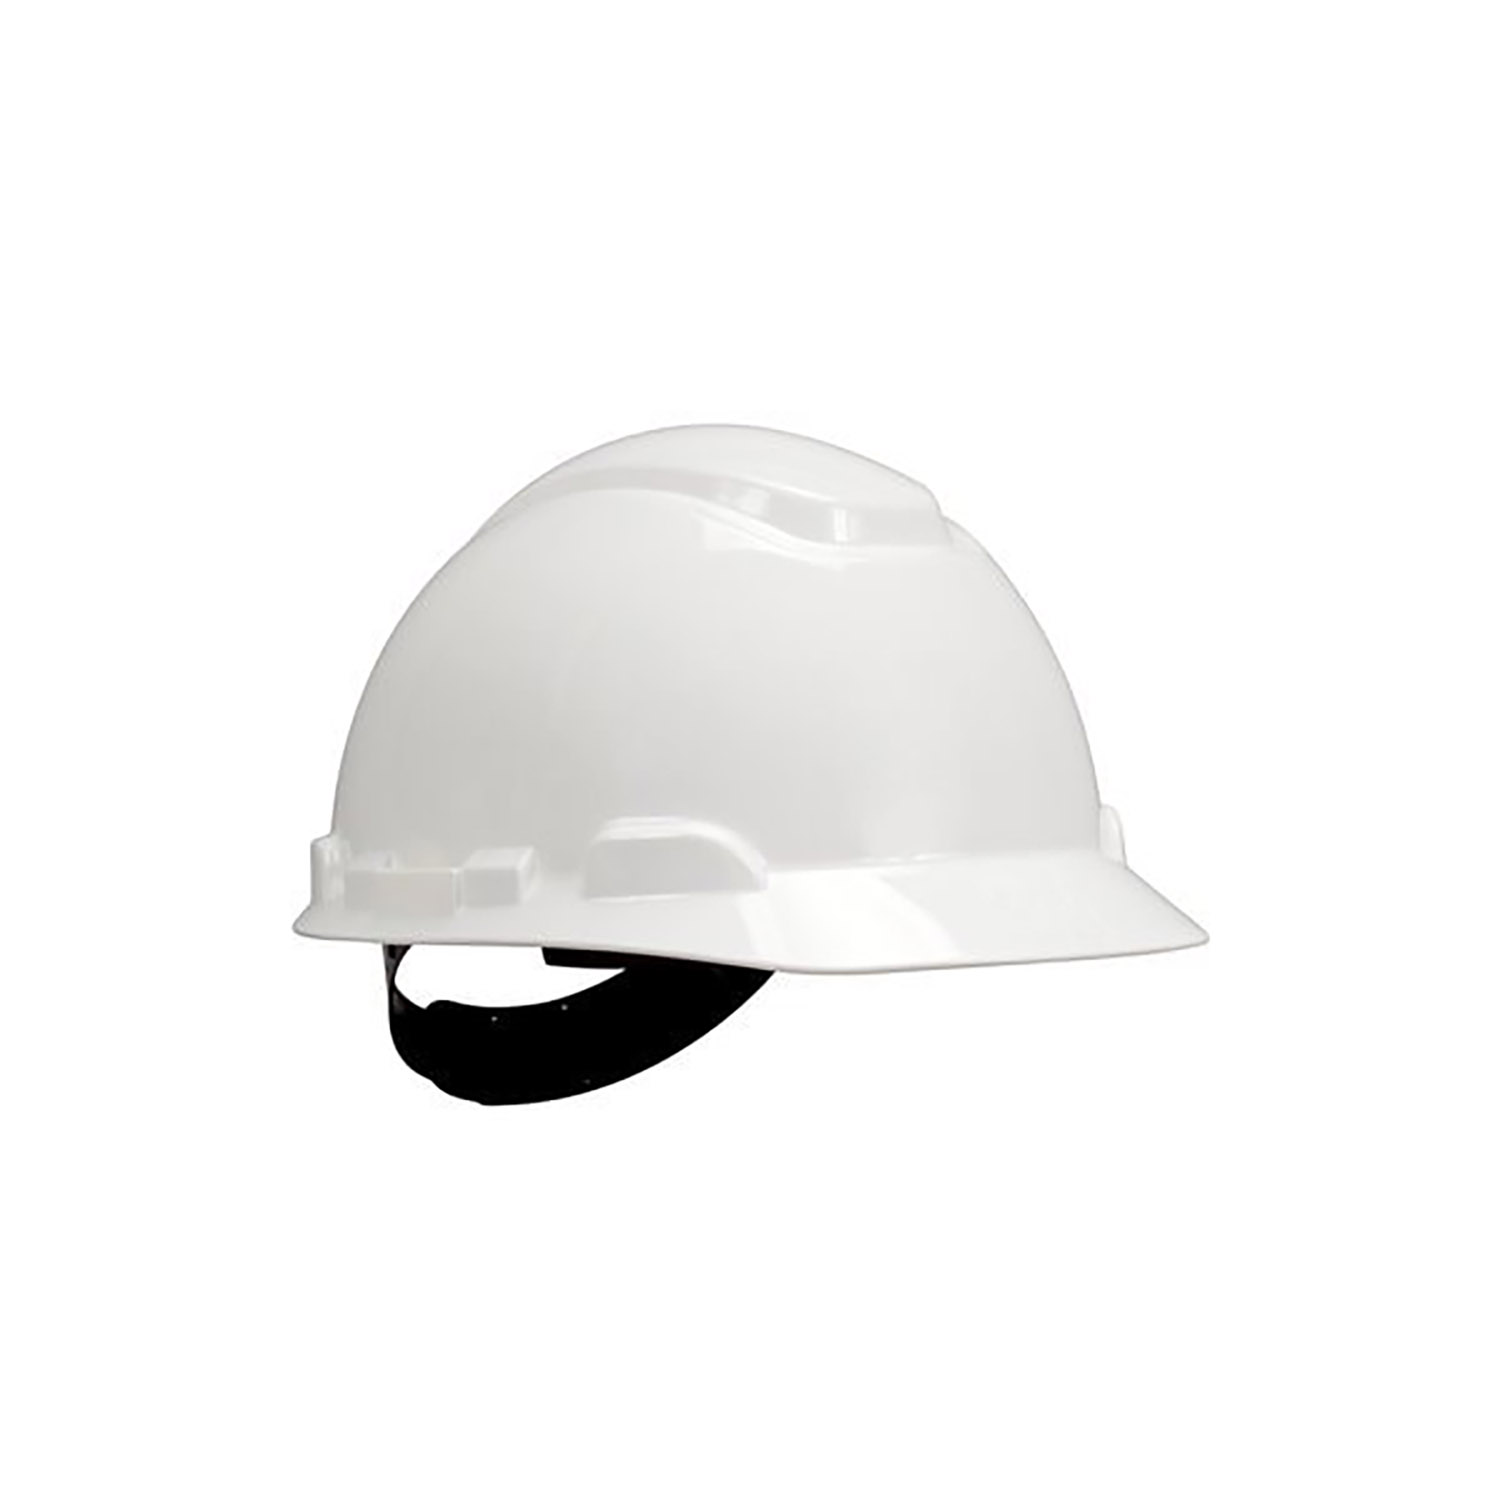 Dielectric Safety Helmet